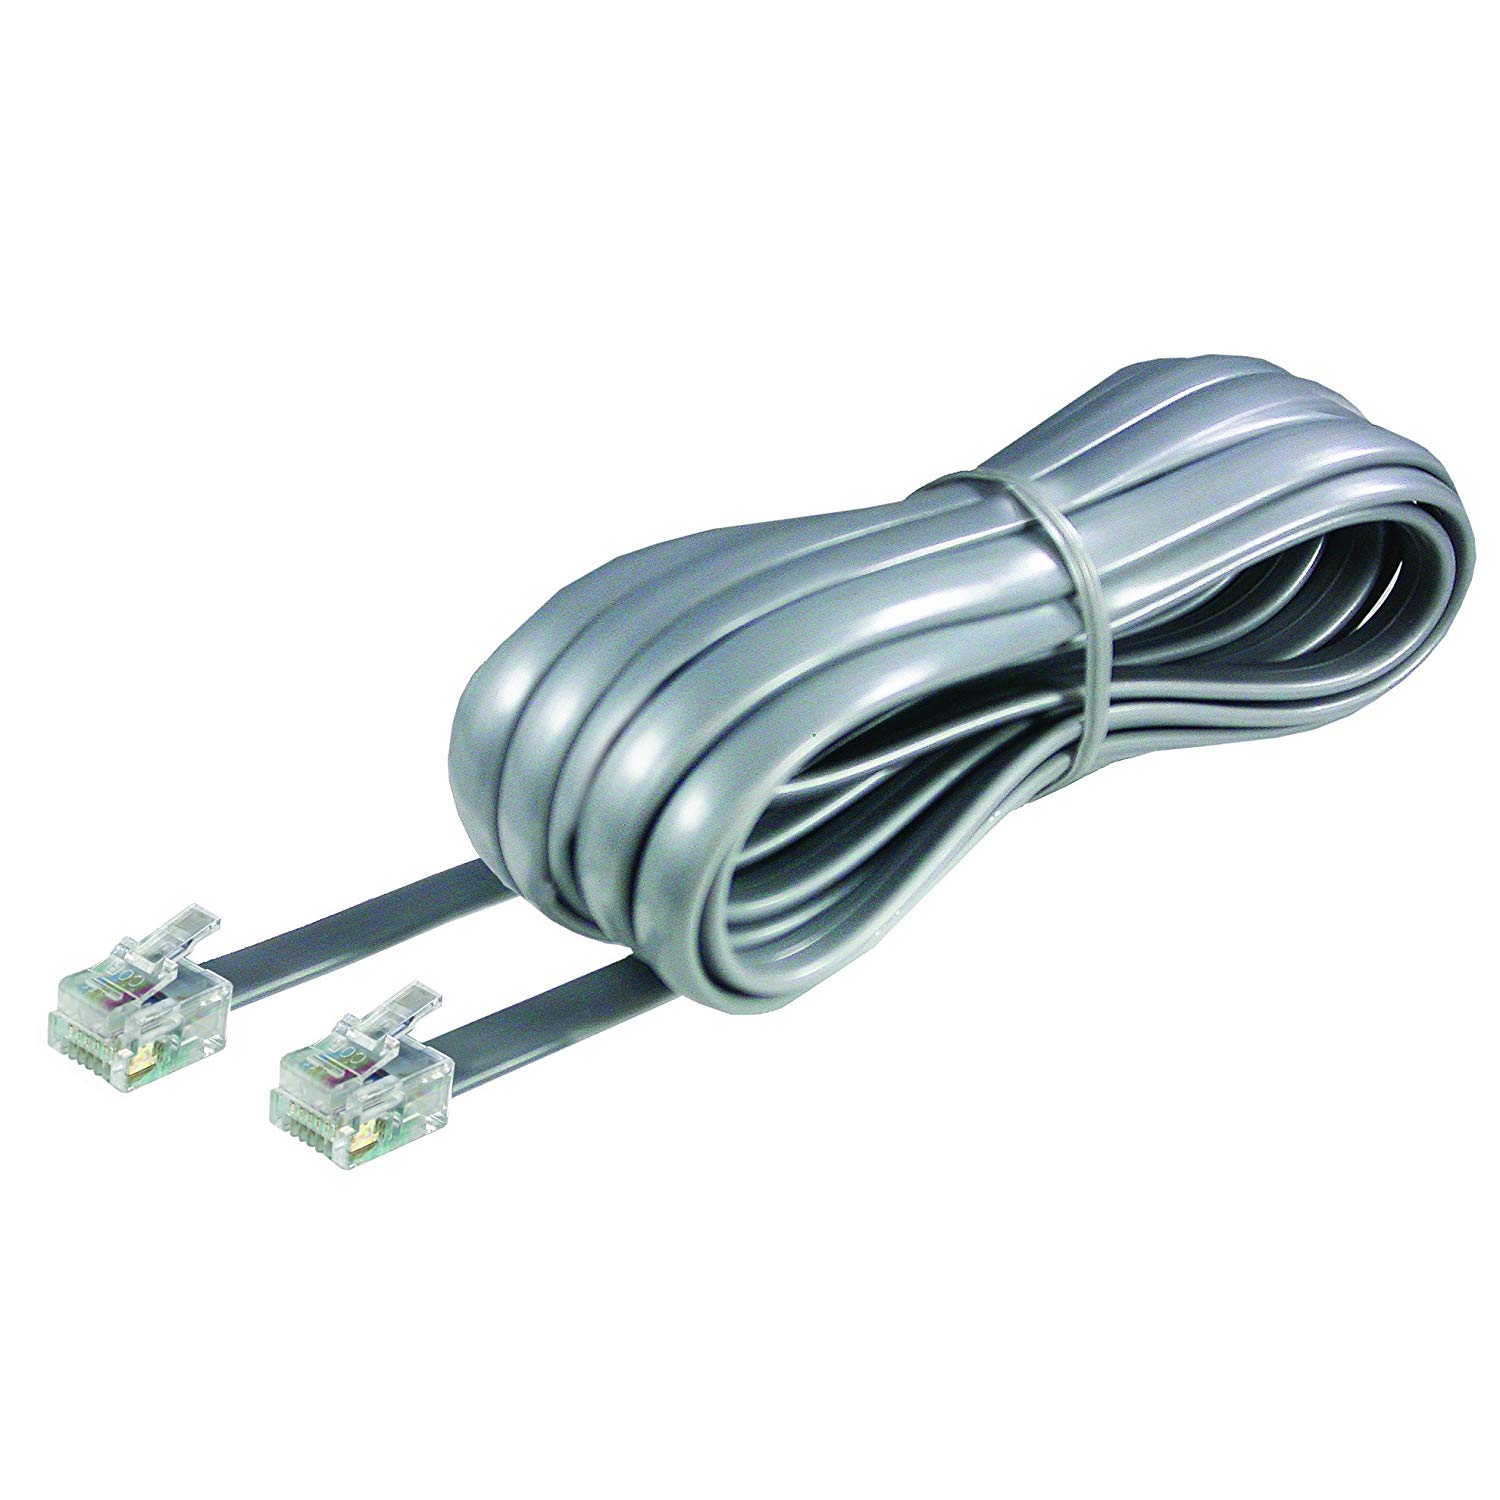 Softalk Modular Connectors Telephone Extension Cord, 15-Foot